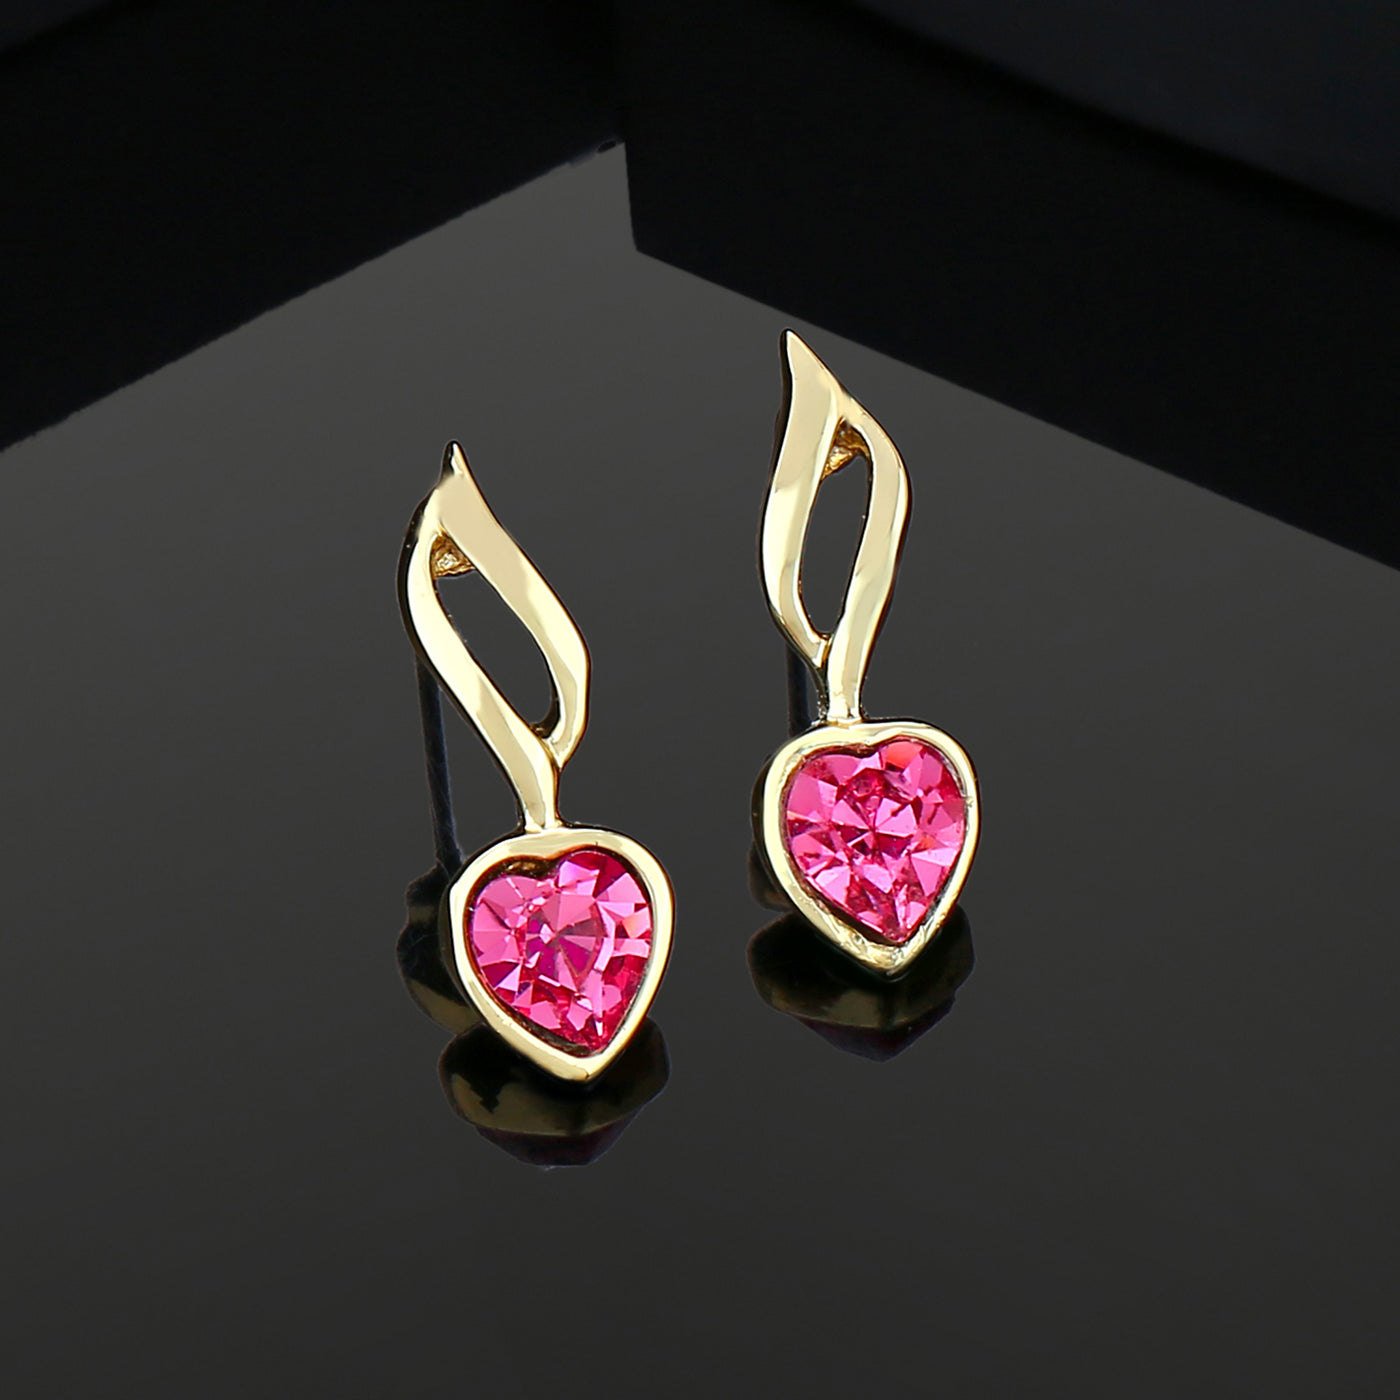 Buy Swarovski Pink Heart Earrings Sparkly Crystal Heart Shaped Earrings  Love Earrings 925 Sterling Silver Earrings Valentines Day Gift Online in  India - Etsy